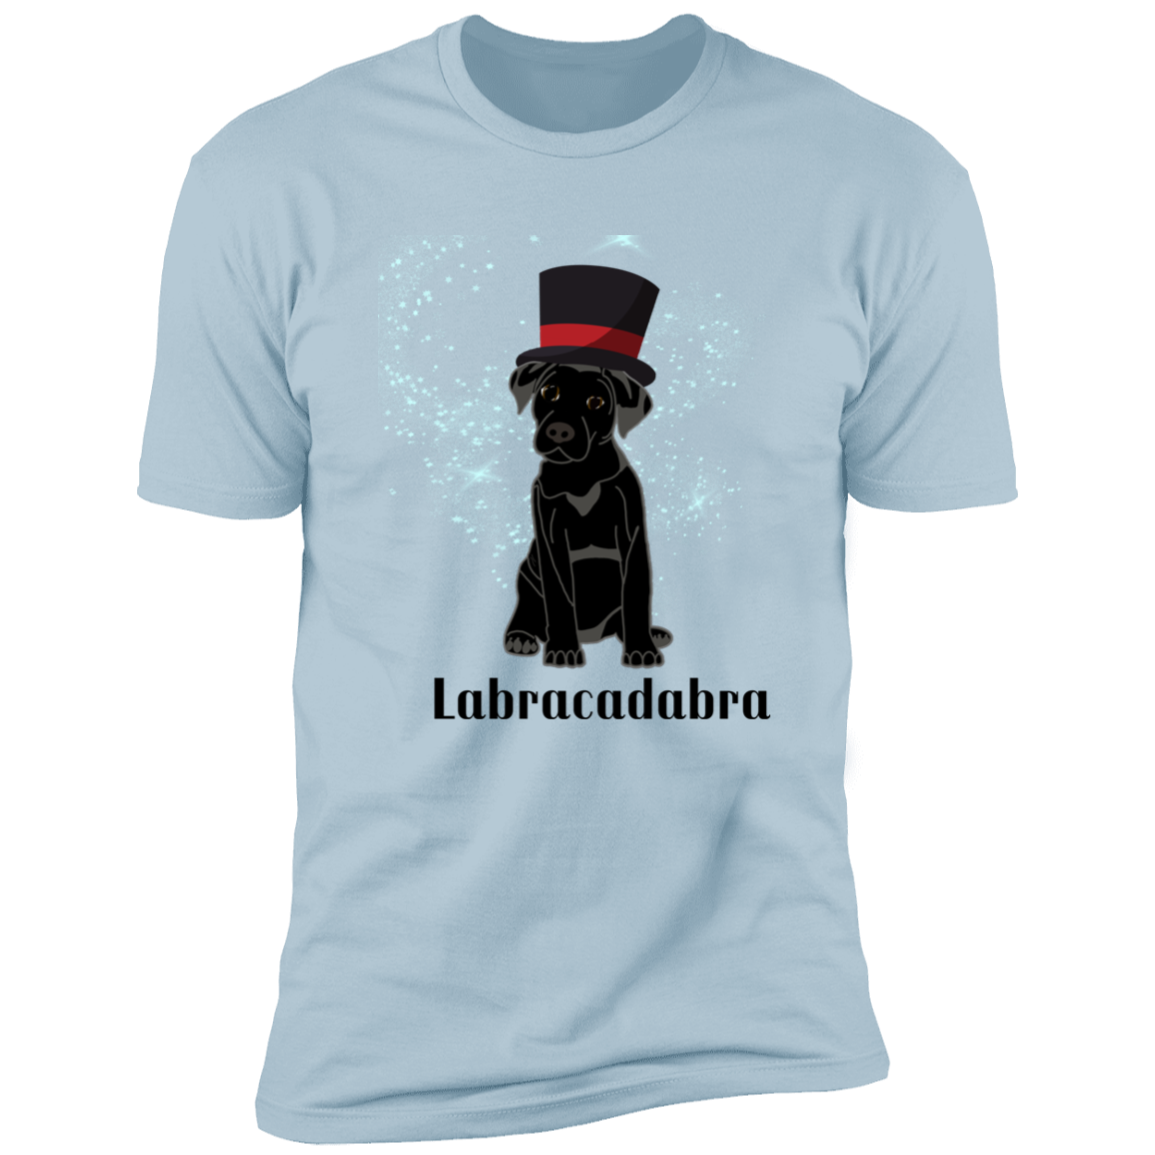 Labracadabra funny dog shirt, funny dog shirt for humans, funny labrador shirt. in light blue